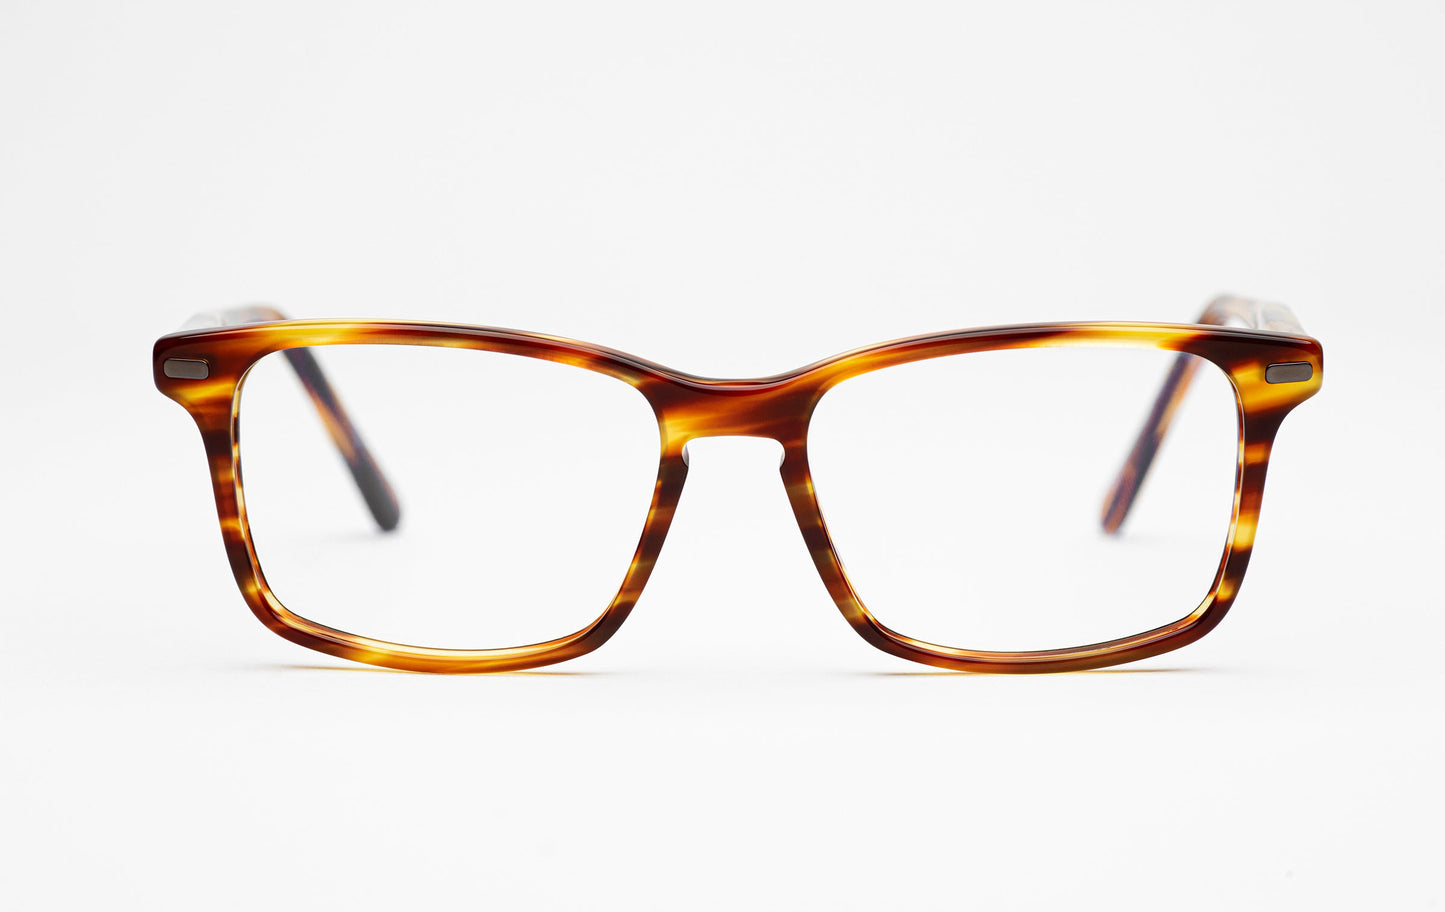 The Champion 2 | Designer Prescription Glasses with Oversized Rectangular Frames – Classic Tortoiseshell